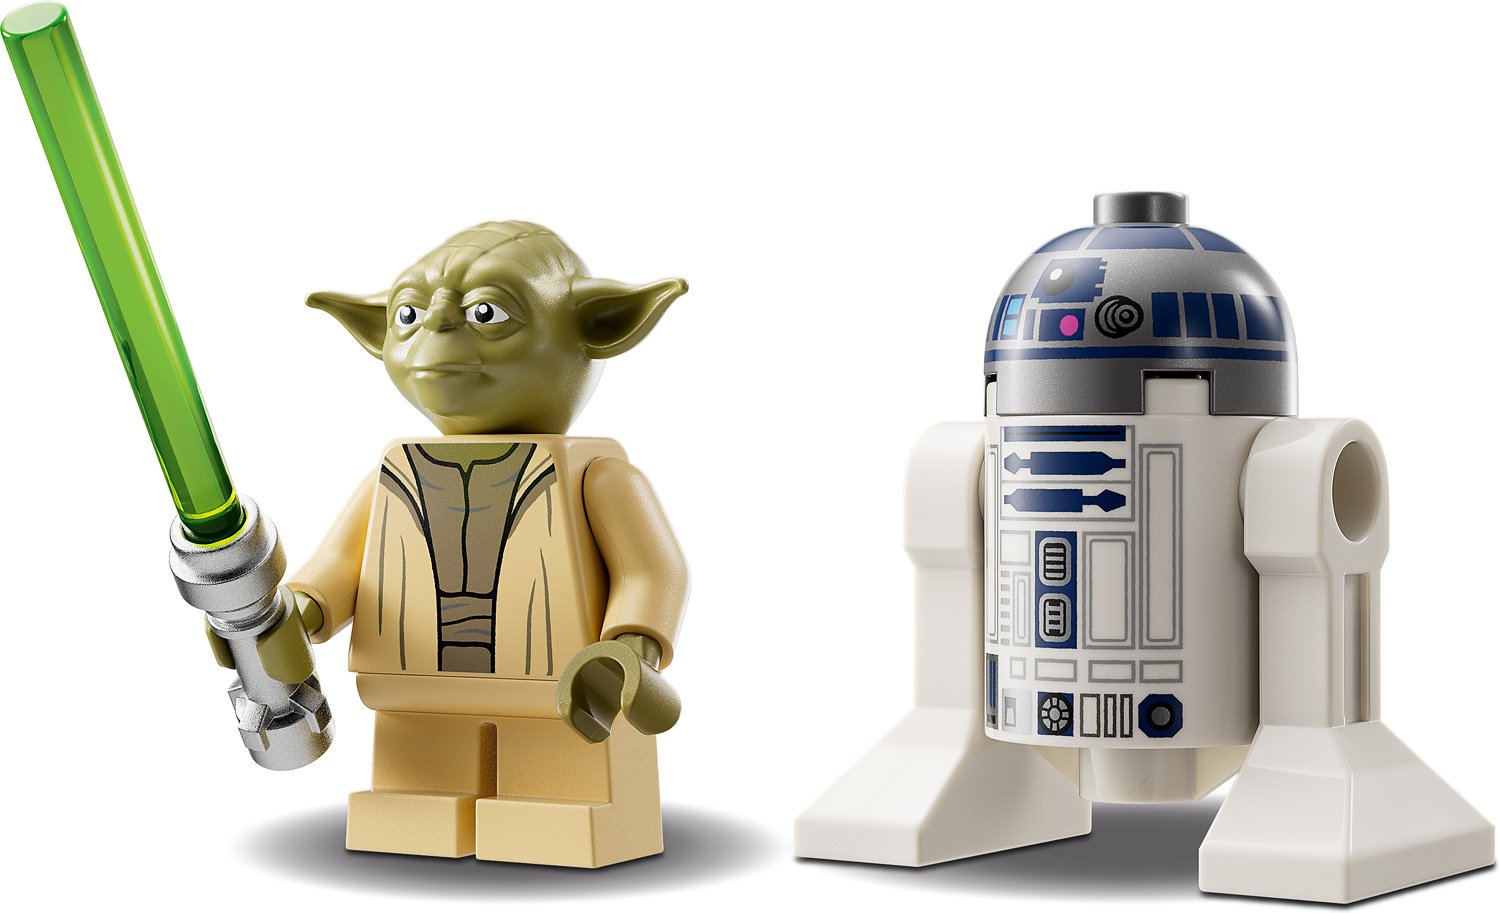 LEGO STAR WARS 75360 Yoda's Jedi Starfighter